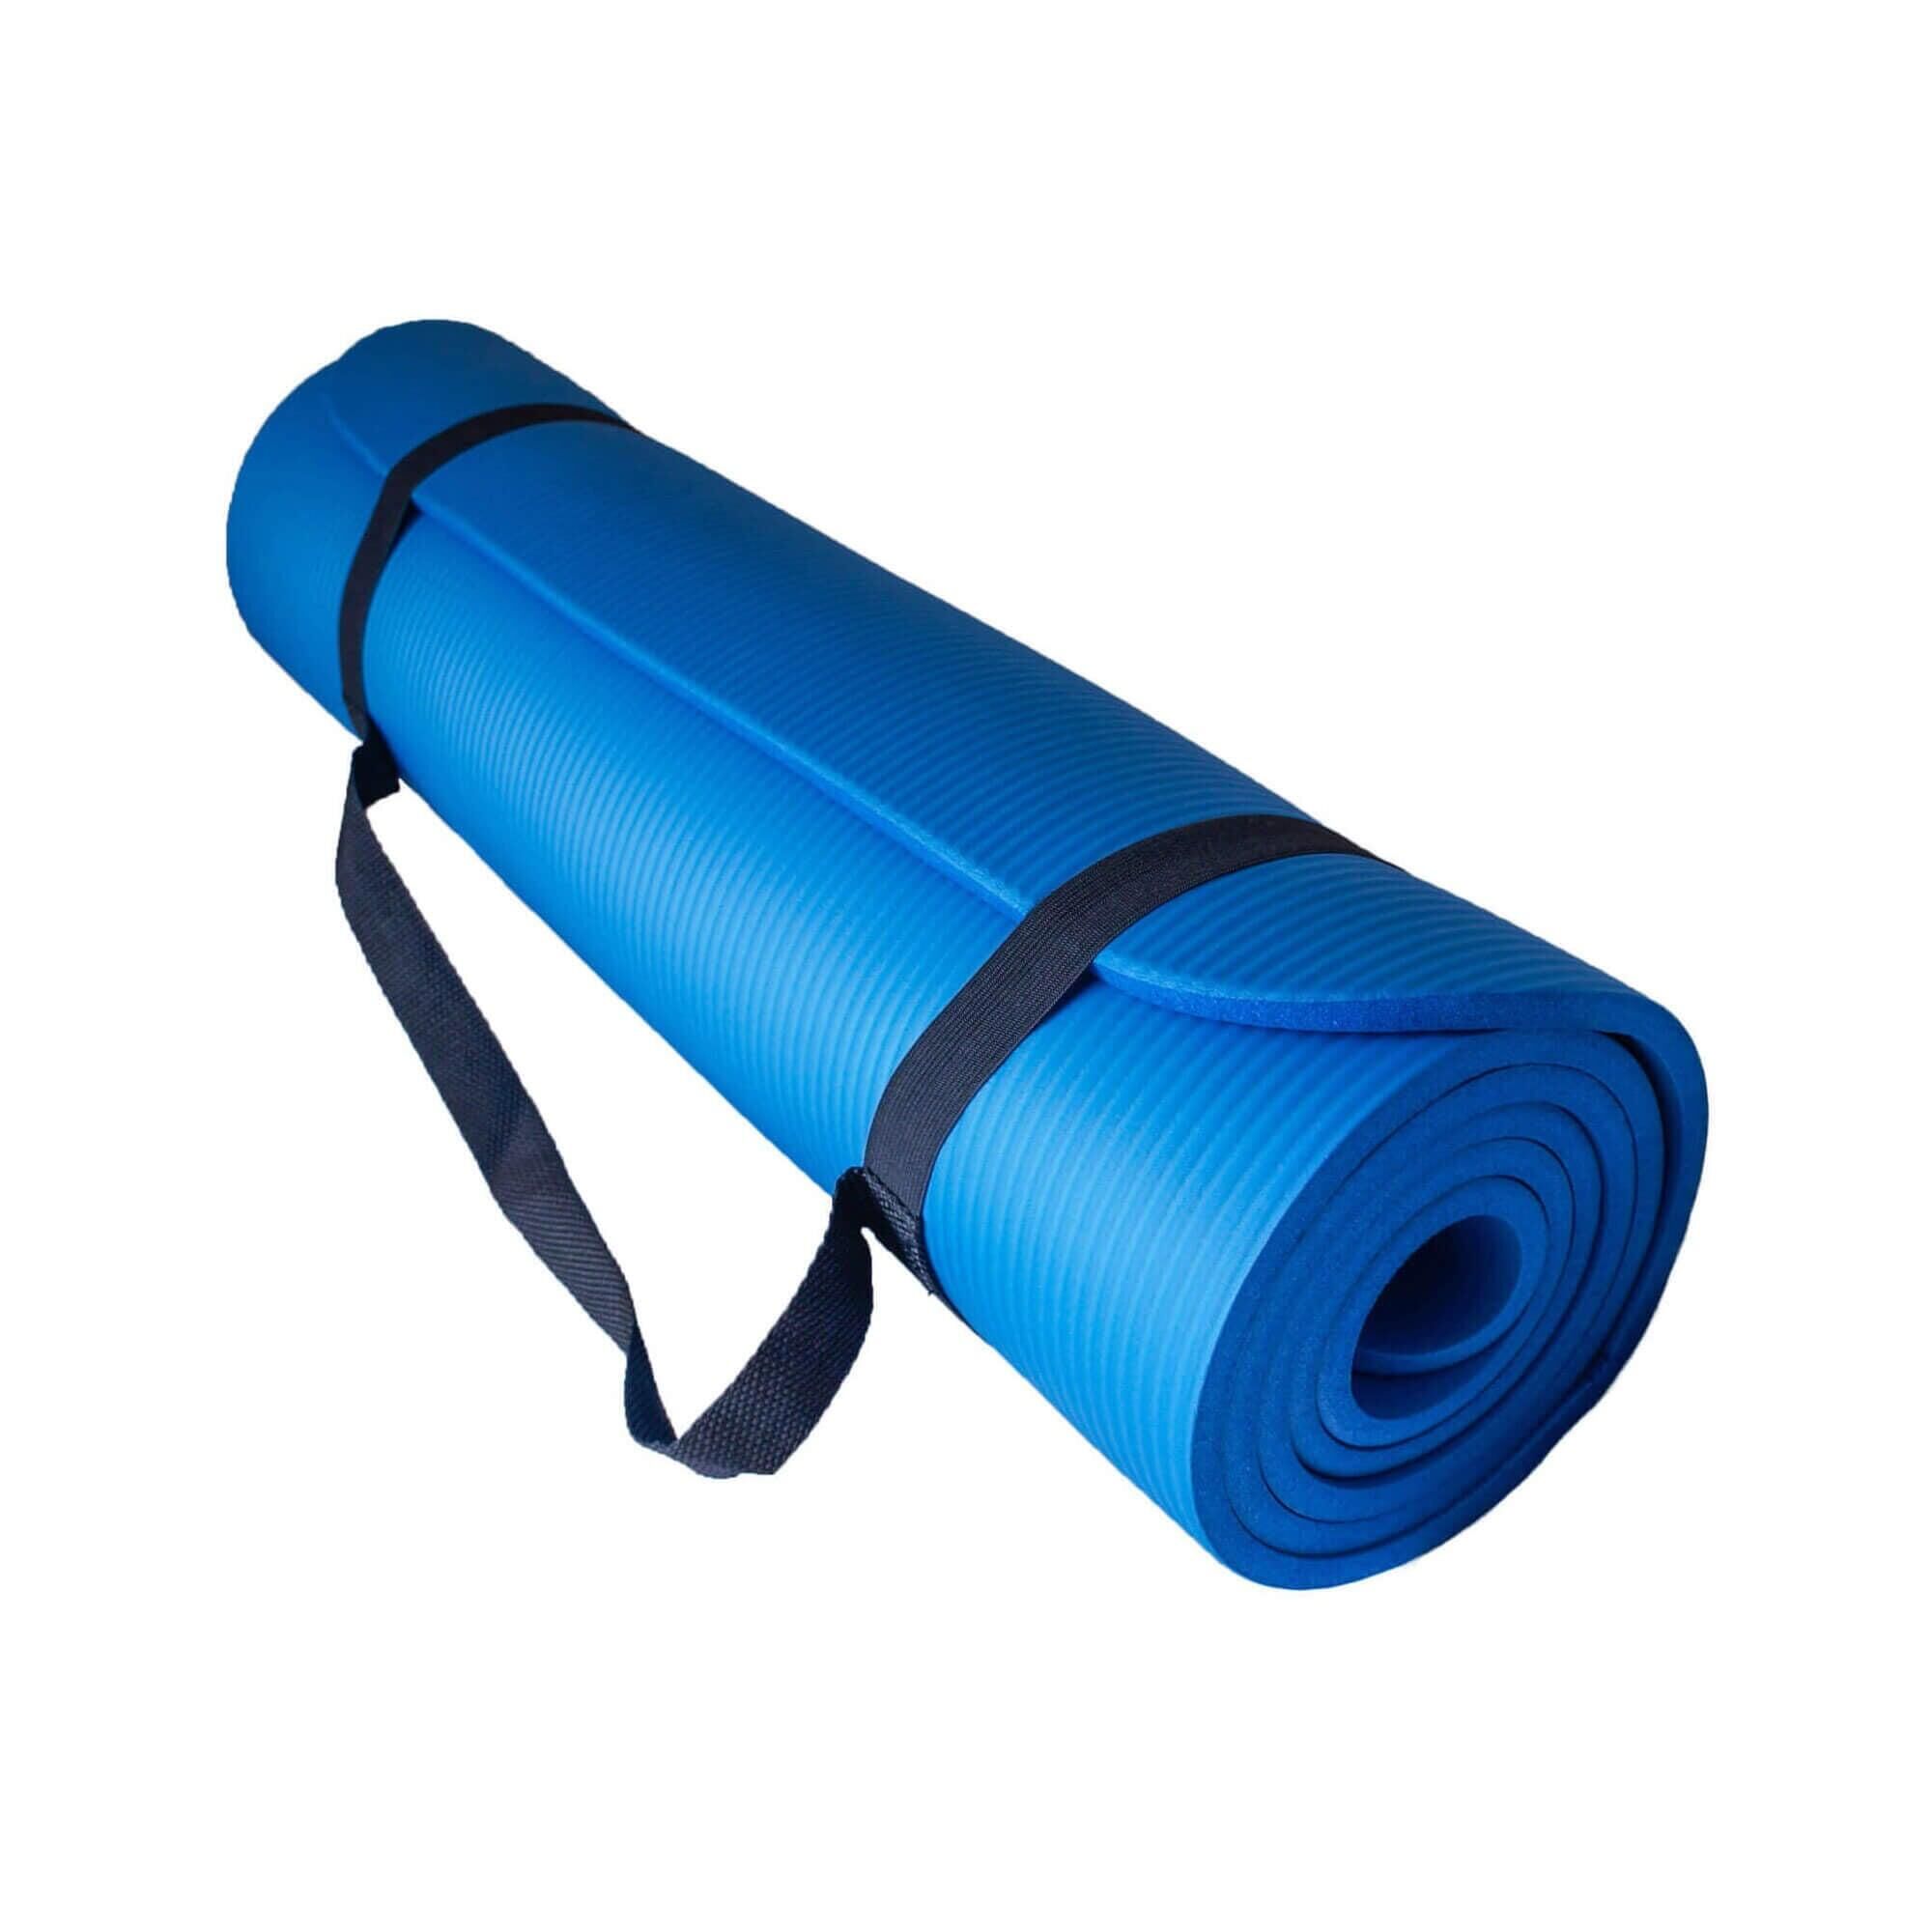 Jade Yoga Mat Harmony Professional (5mm x 173cm) - midnight blue at Yoga -Artikel.ch